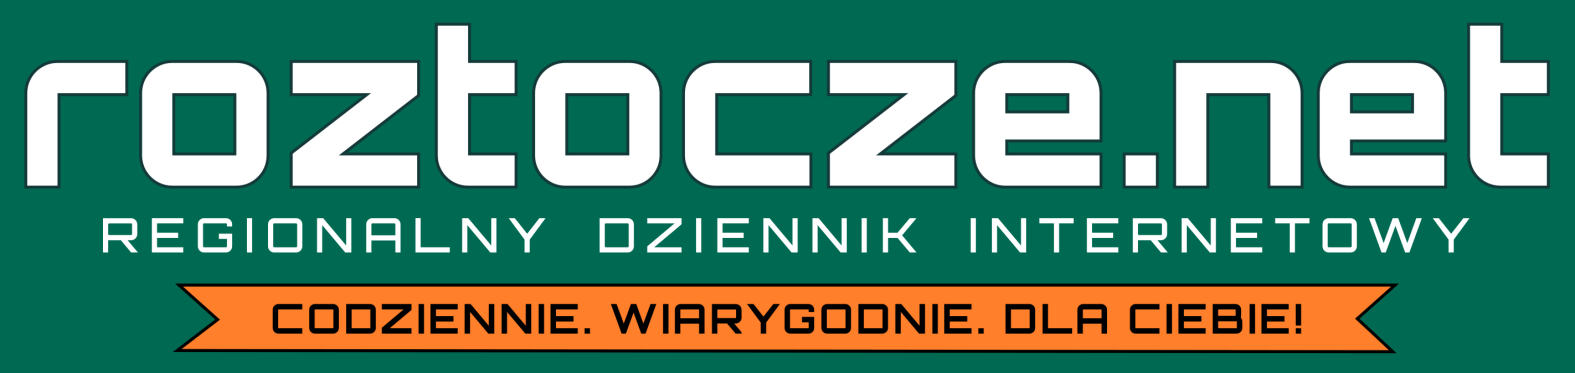 roztocze.net_logo_haslo_zielone-4.png.webp